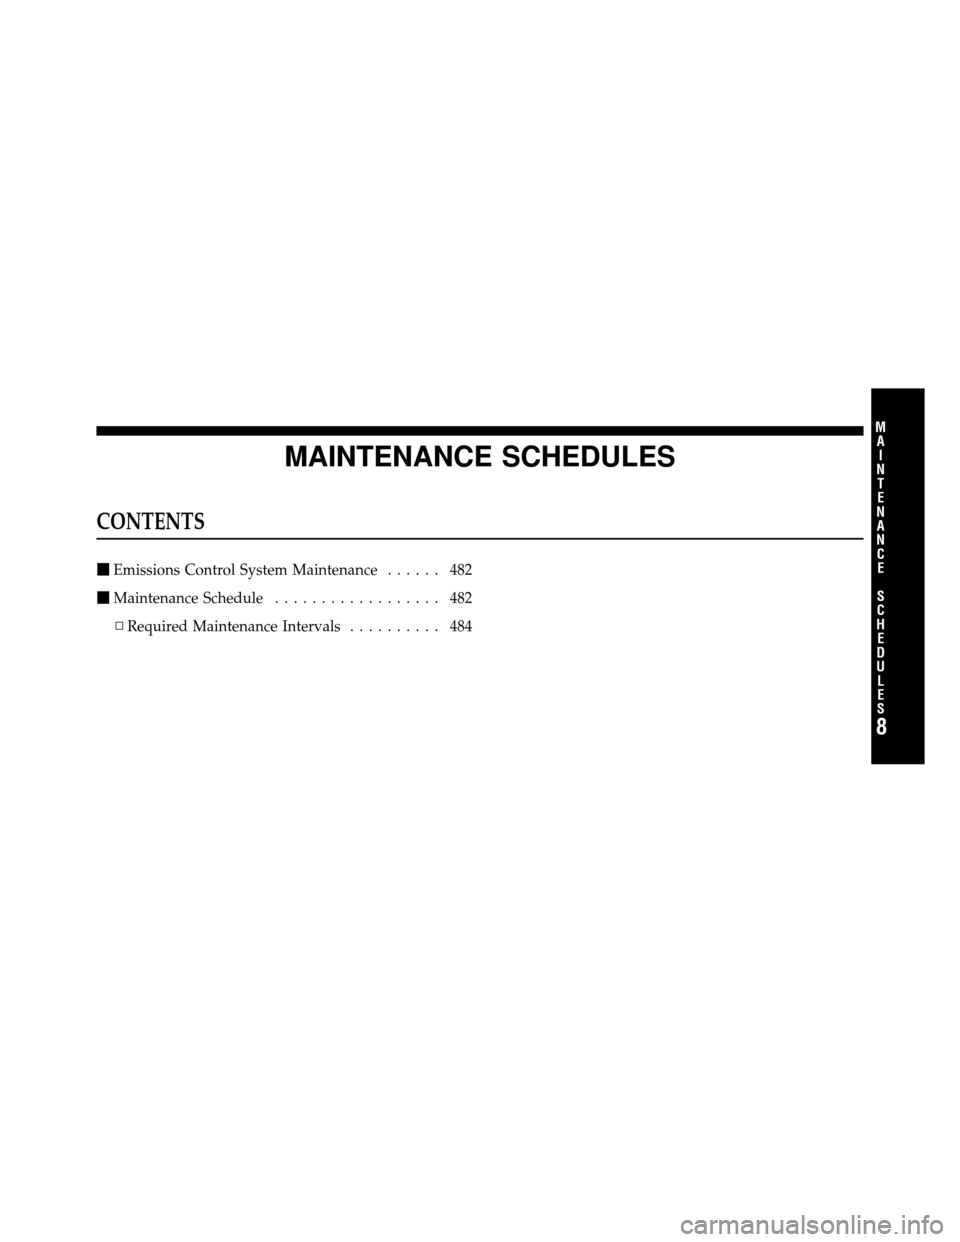 DODGE GRAND CARAVAN 2010 5.G User Guide 
MAINTENANCE SCHEDULES
CONTENTS
Emissions Control System Maintenance ...... 482
 Maintenance Schedule .................. 482
▫ Required Maintenance Intervals .......... 484
8
M
A I
N T
E
N A
N CE
